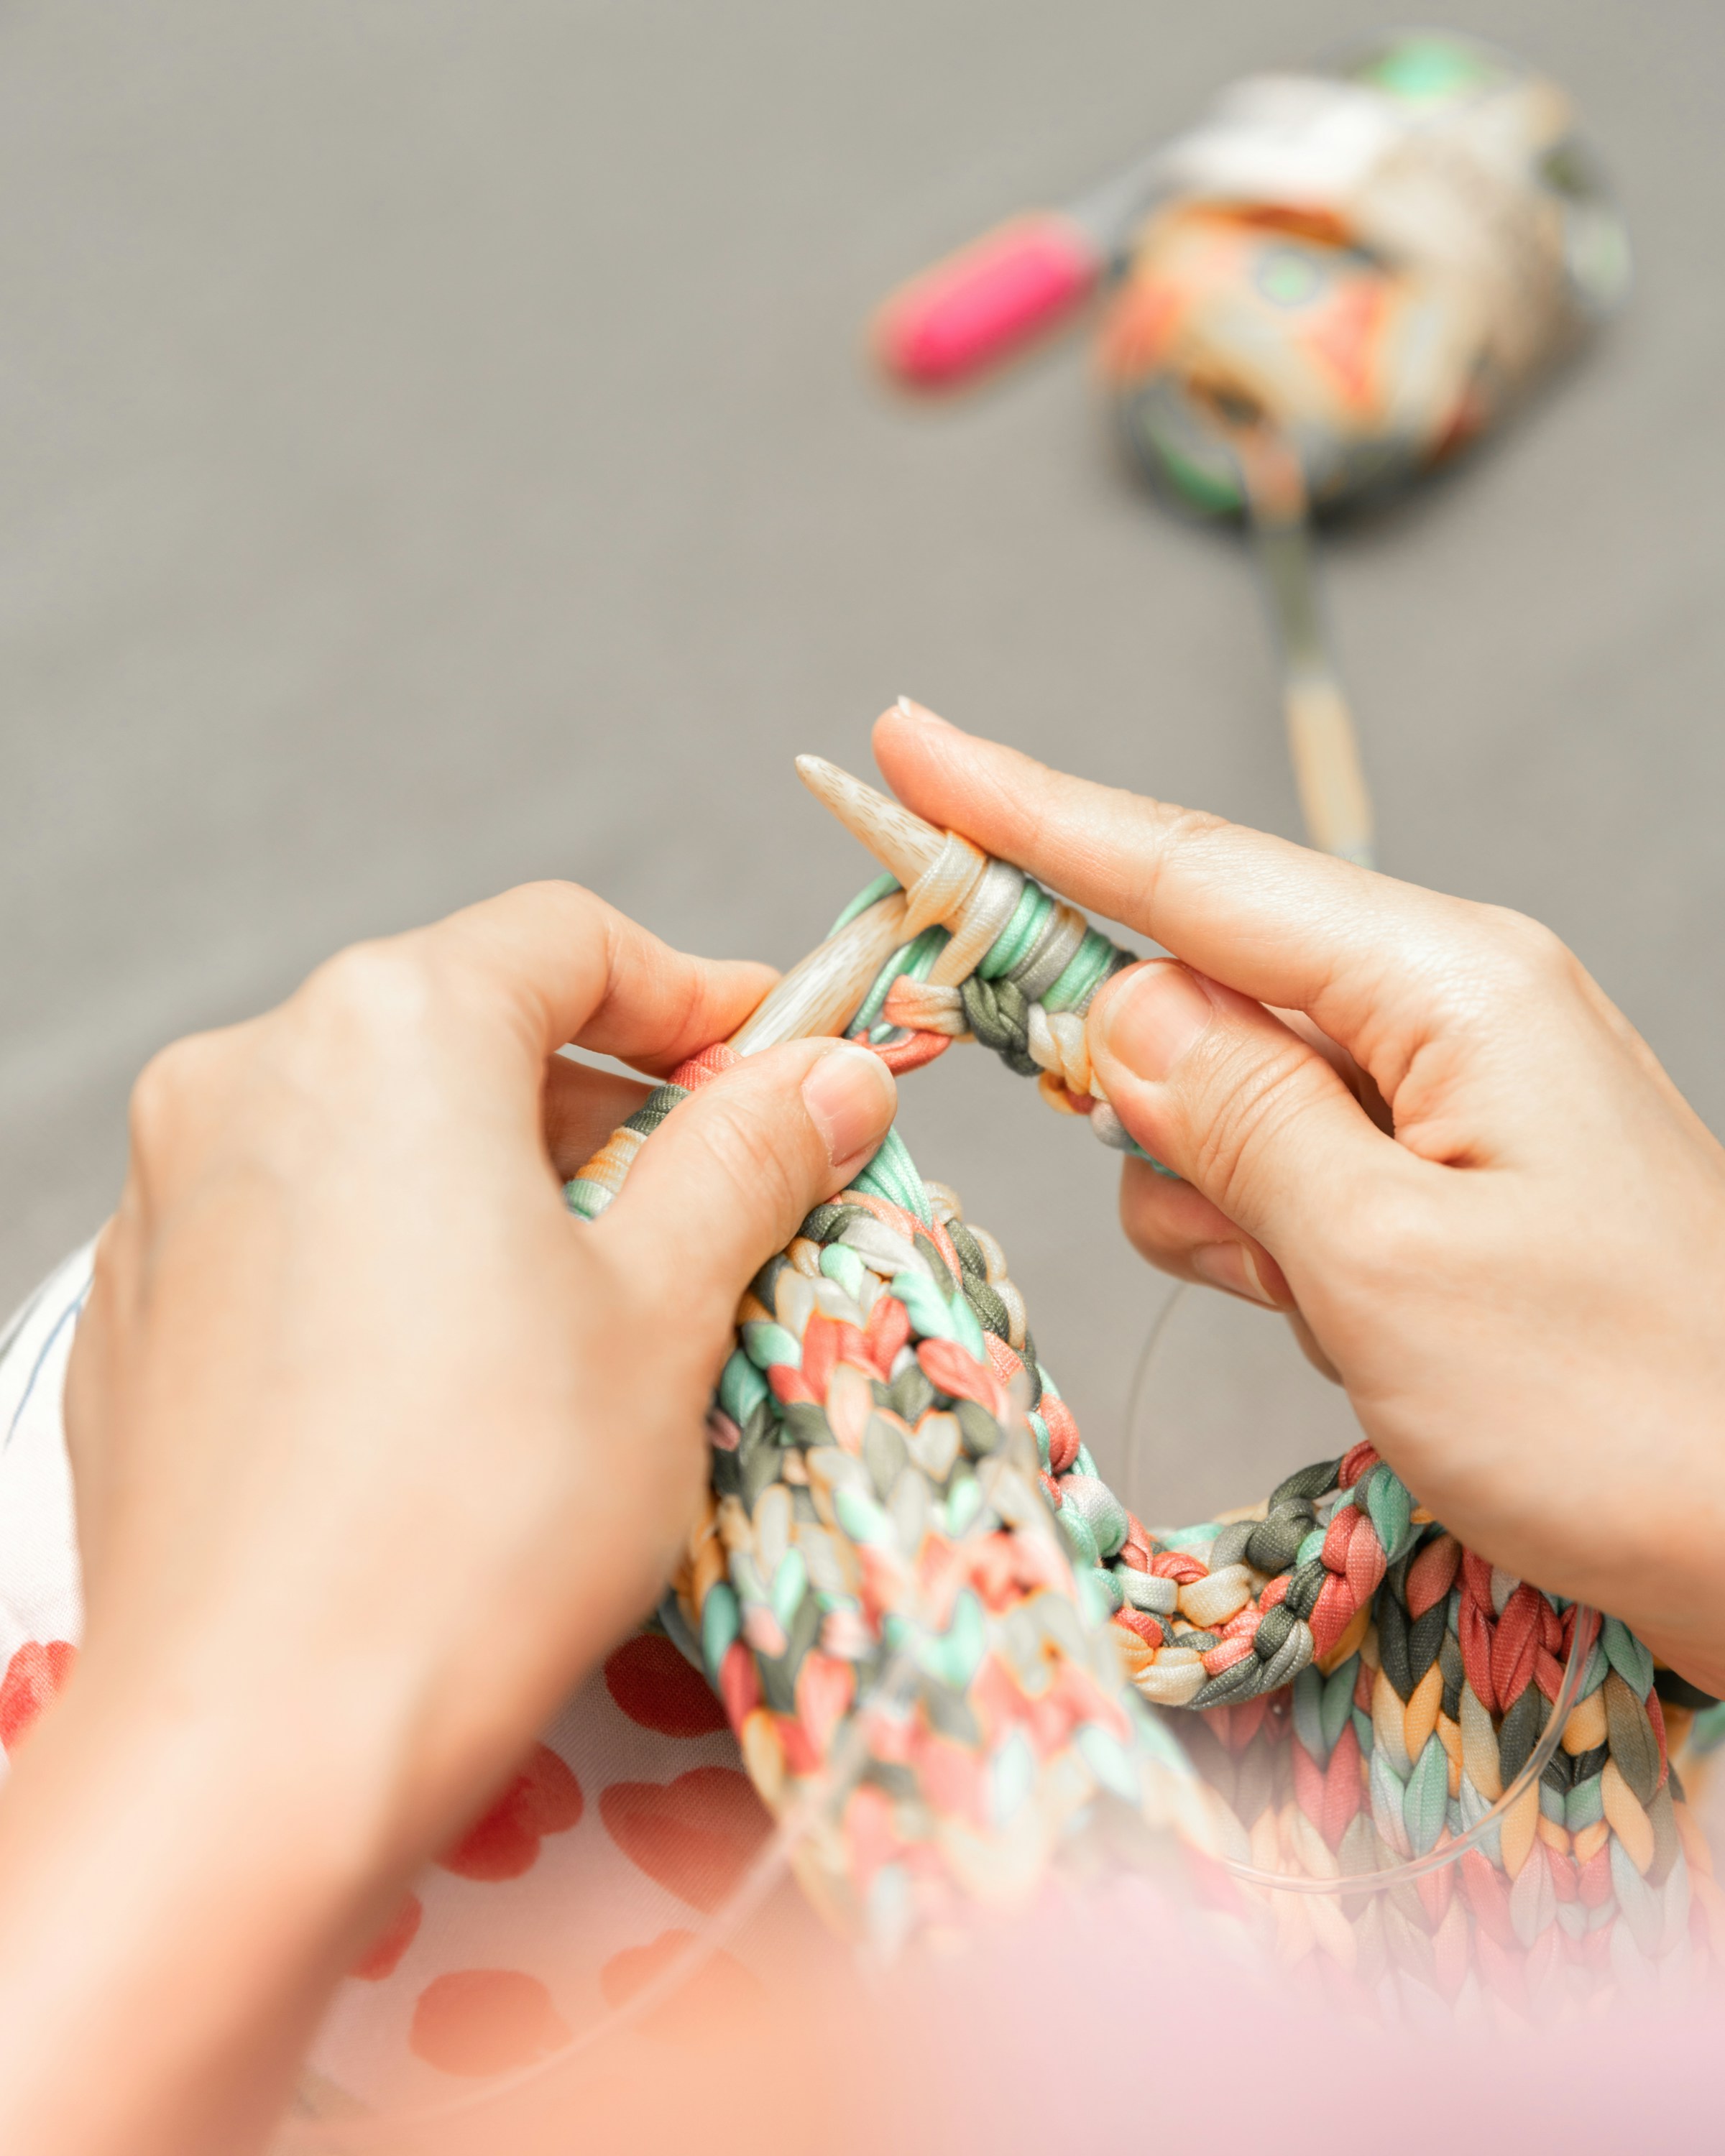 A person knitting | Source: Unsplash